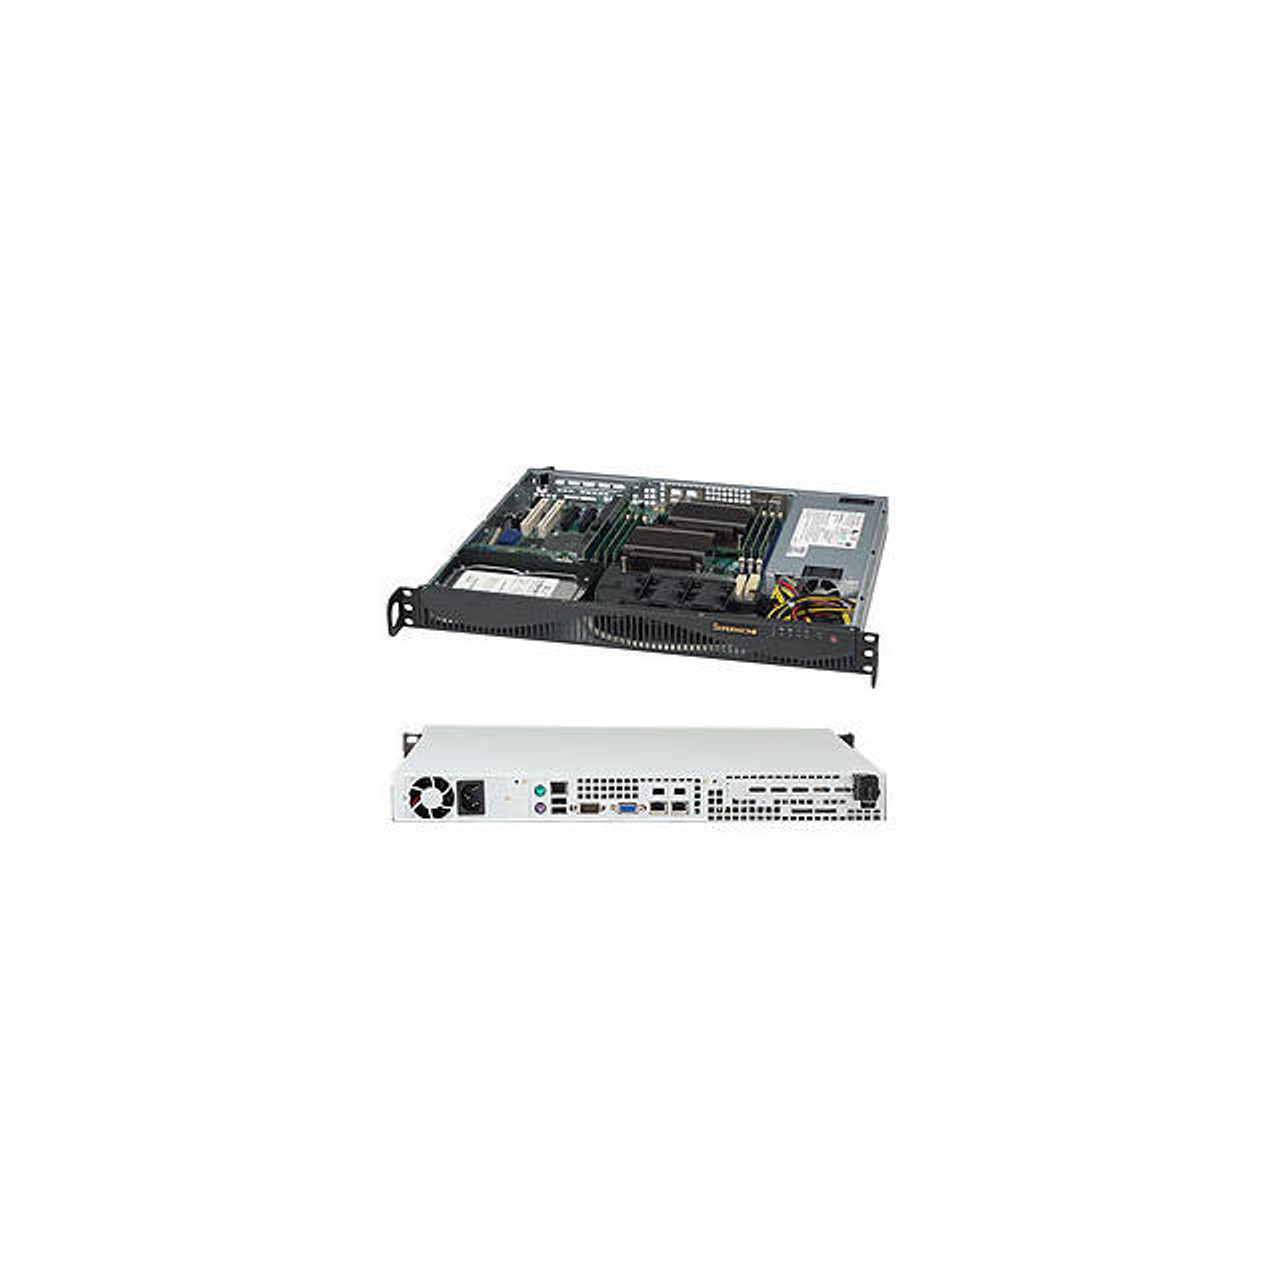 Supermicro SuperChassis CSE-512F-600LB 600W Mini 1U Rackmount Server Chassis (Black)